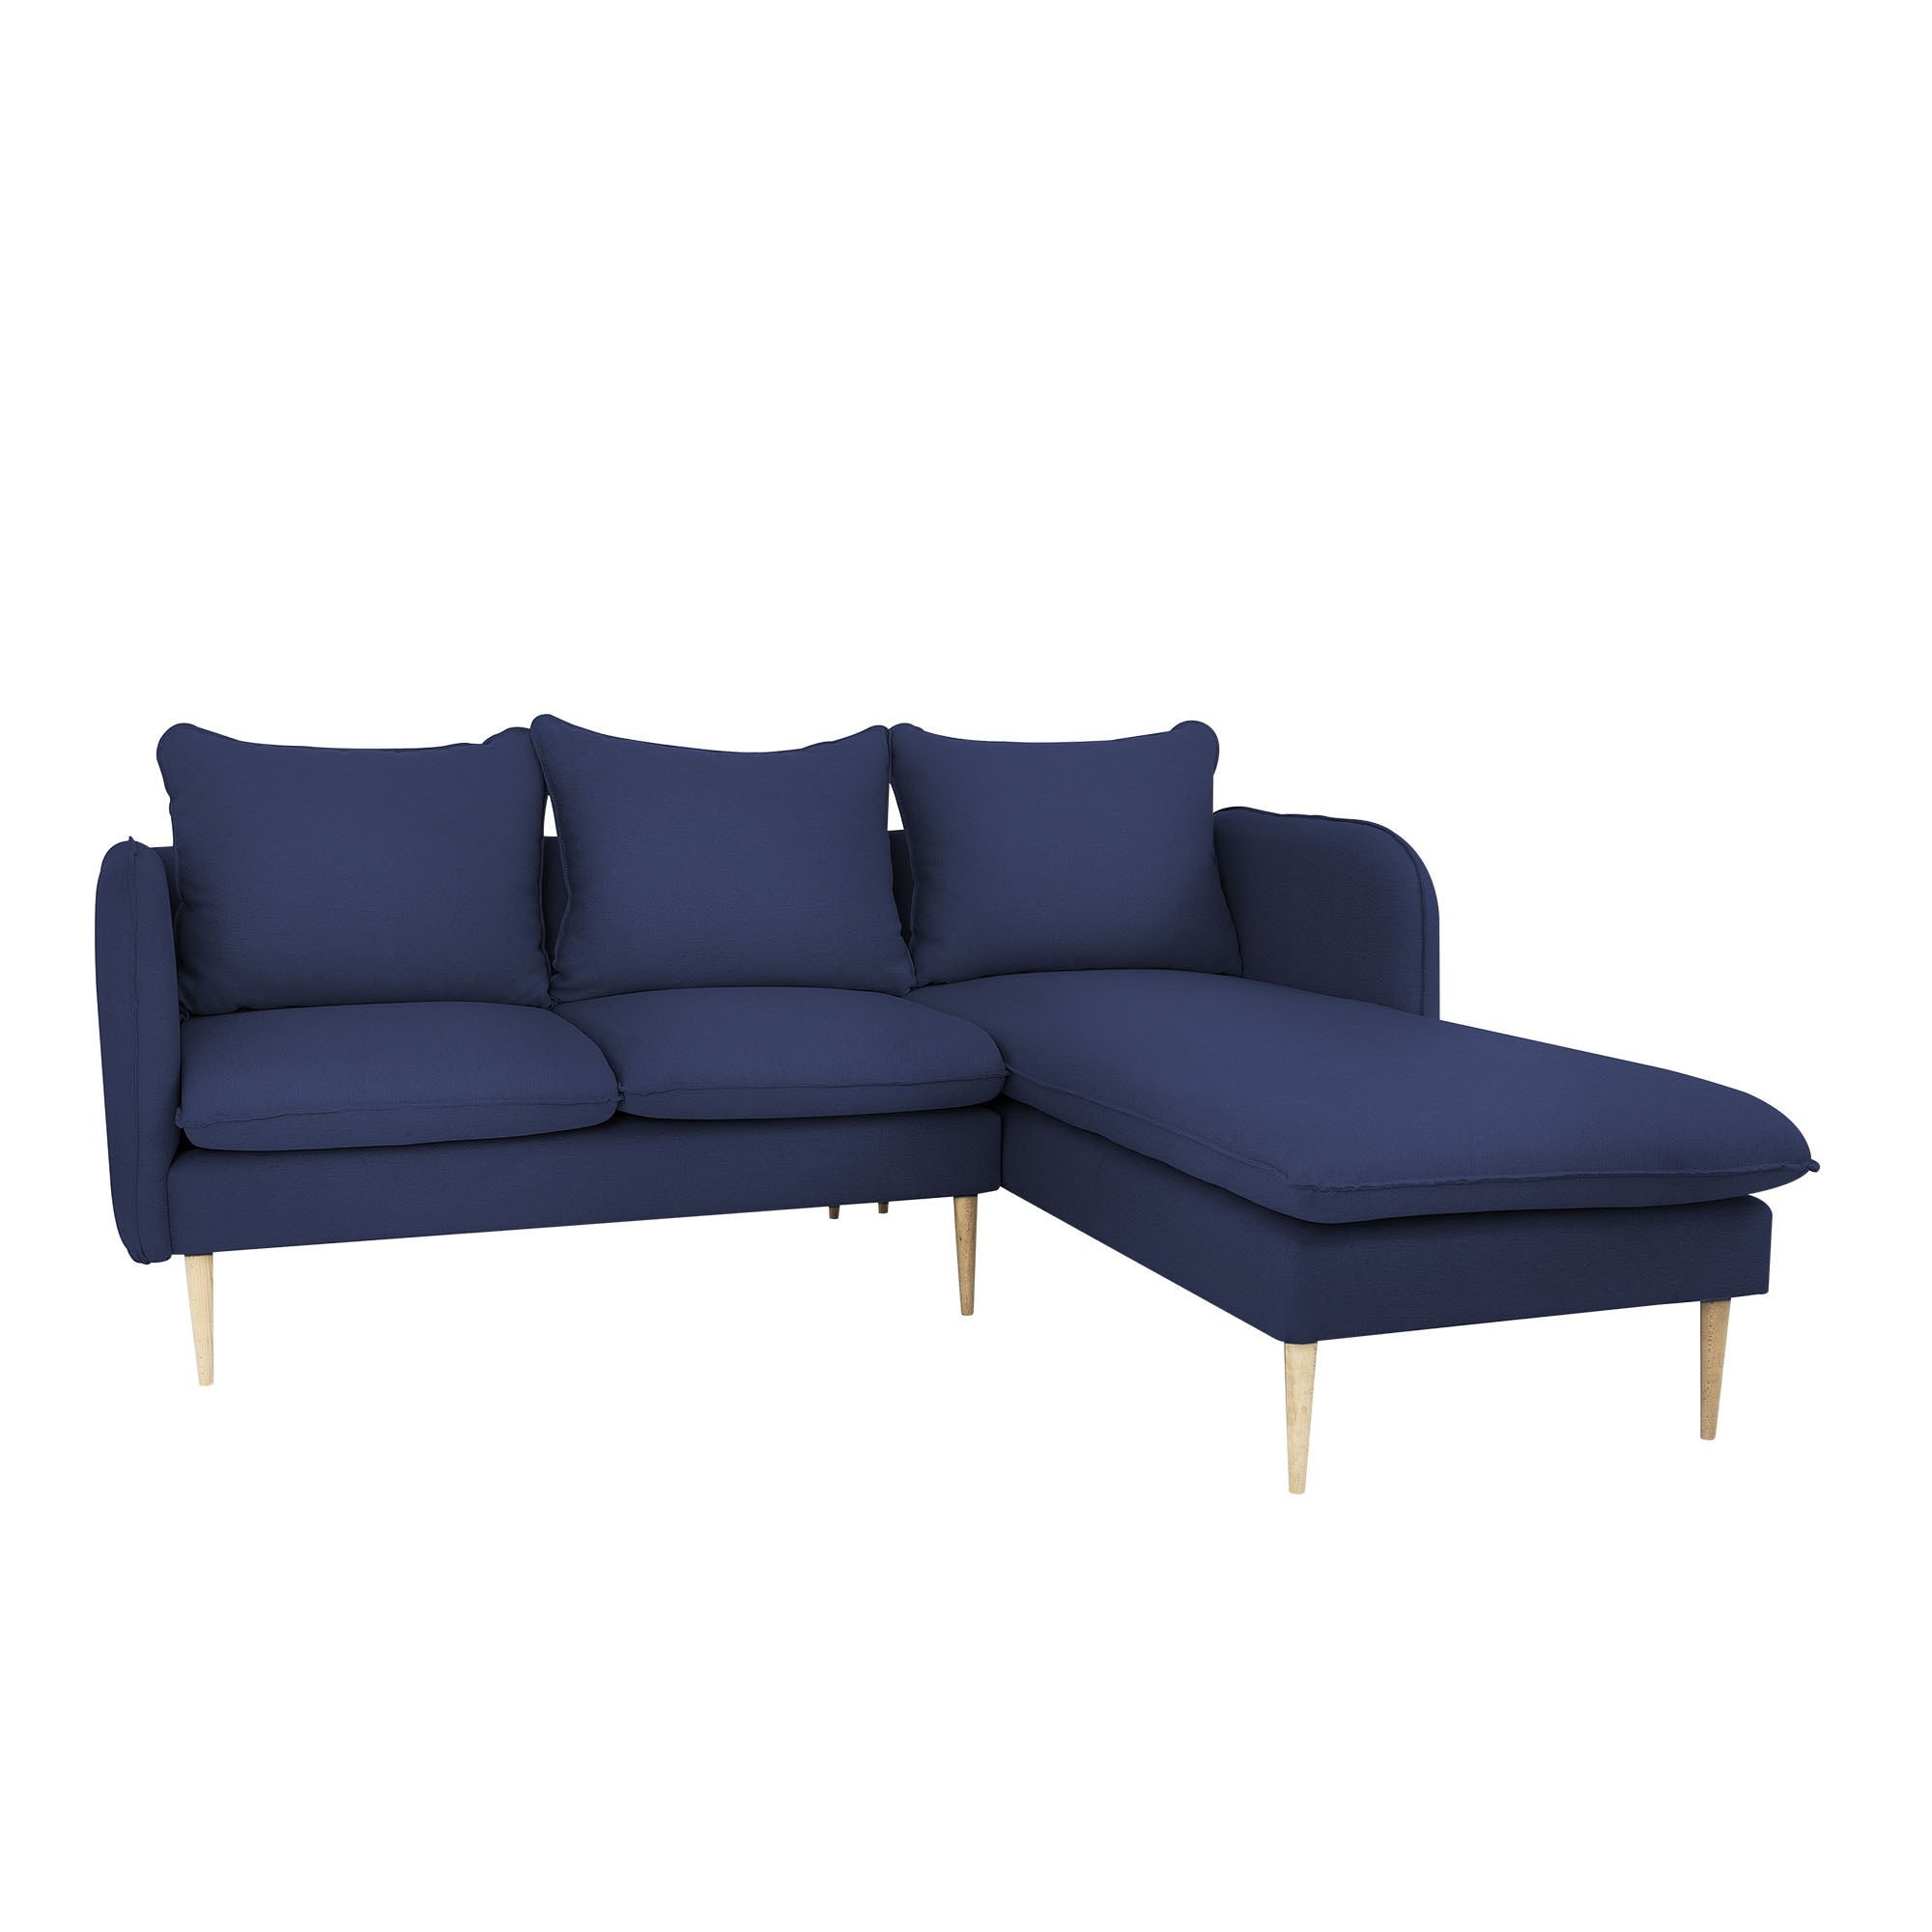 POSH WOOD Corner Sofa Right upholstery colour blue